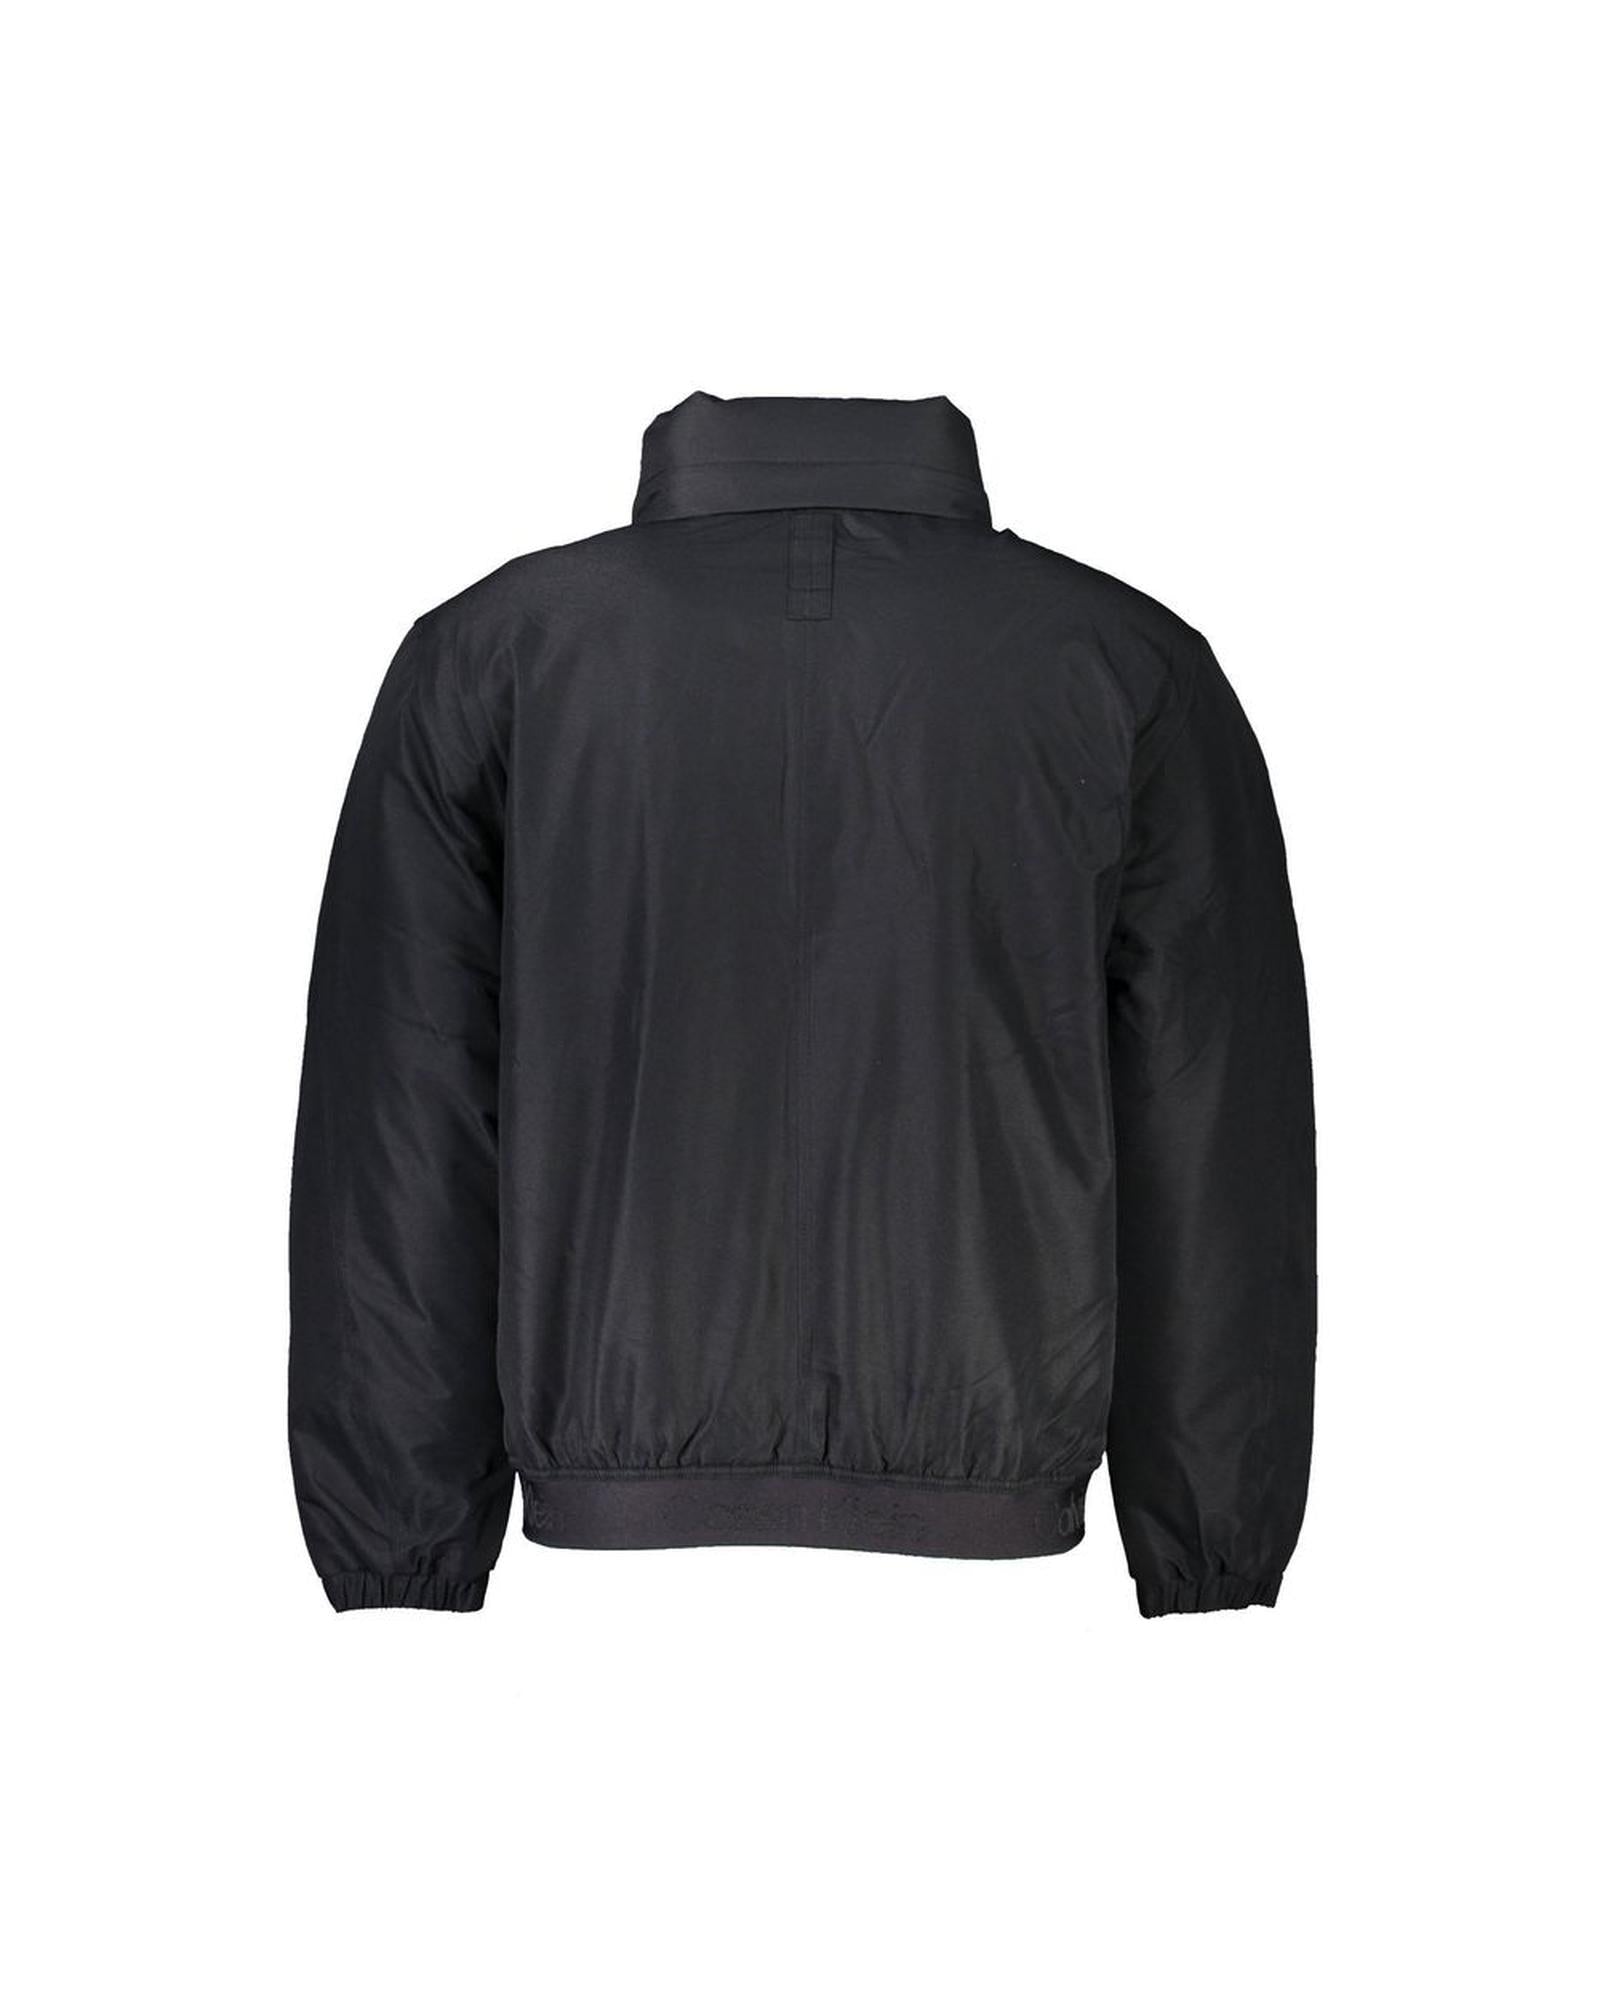 Men's Black Polyester Jacket - M